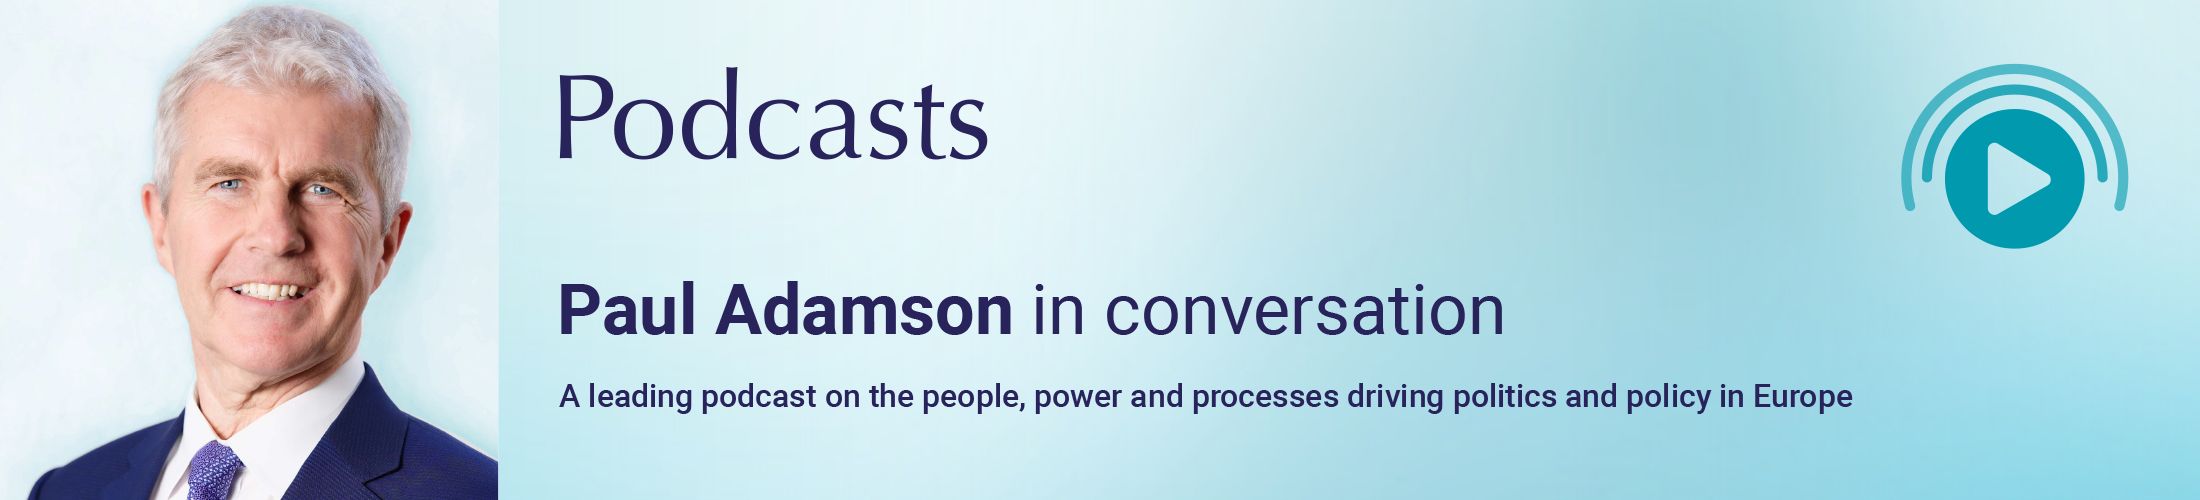 Podcasts: Paul Adamson in conversation